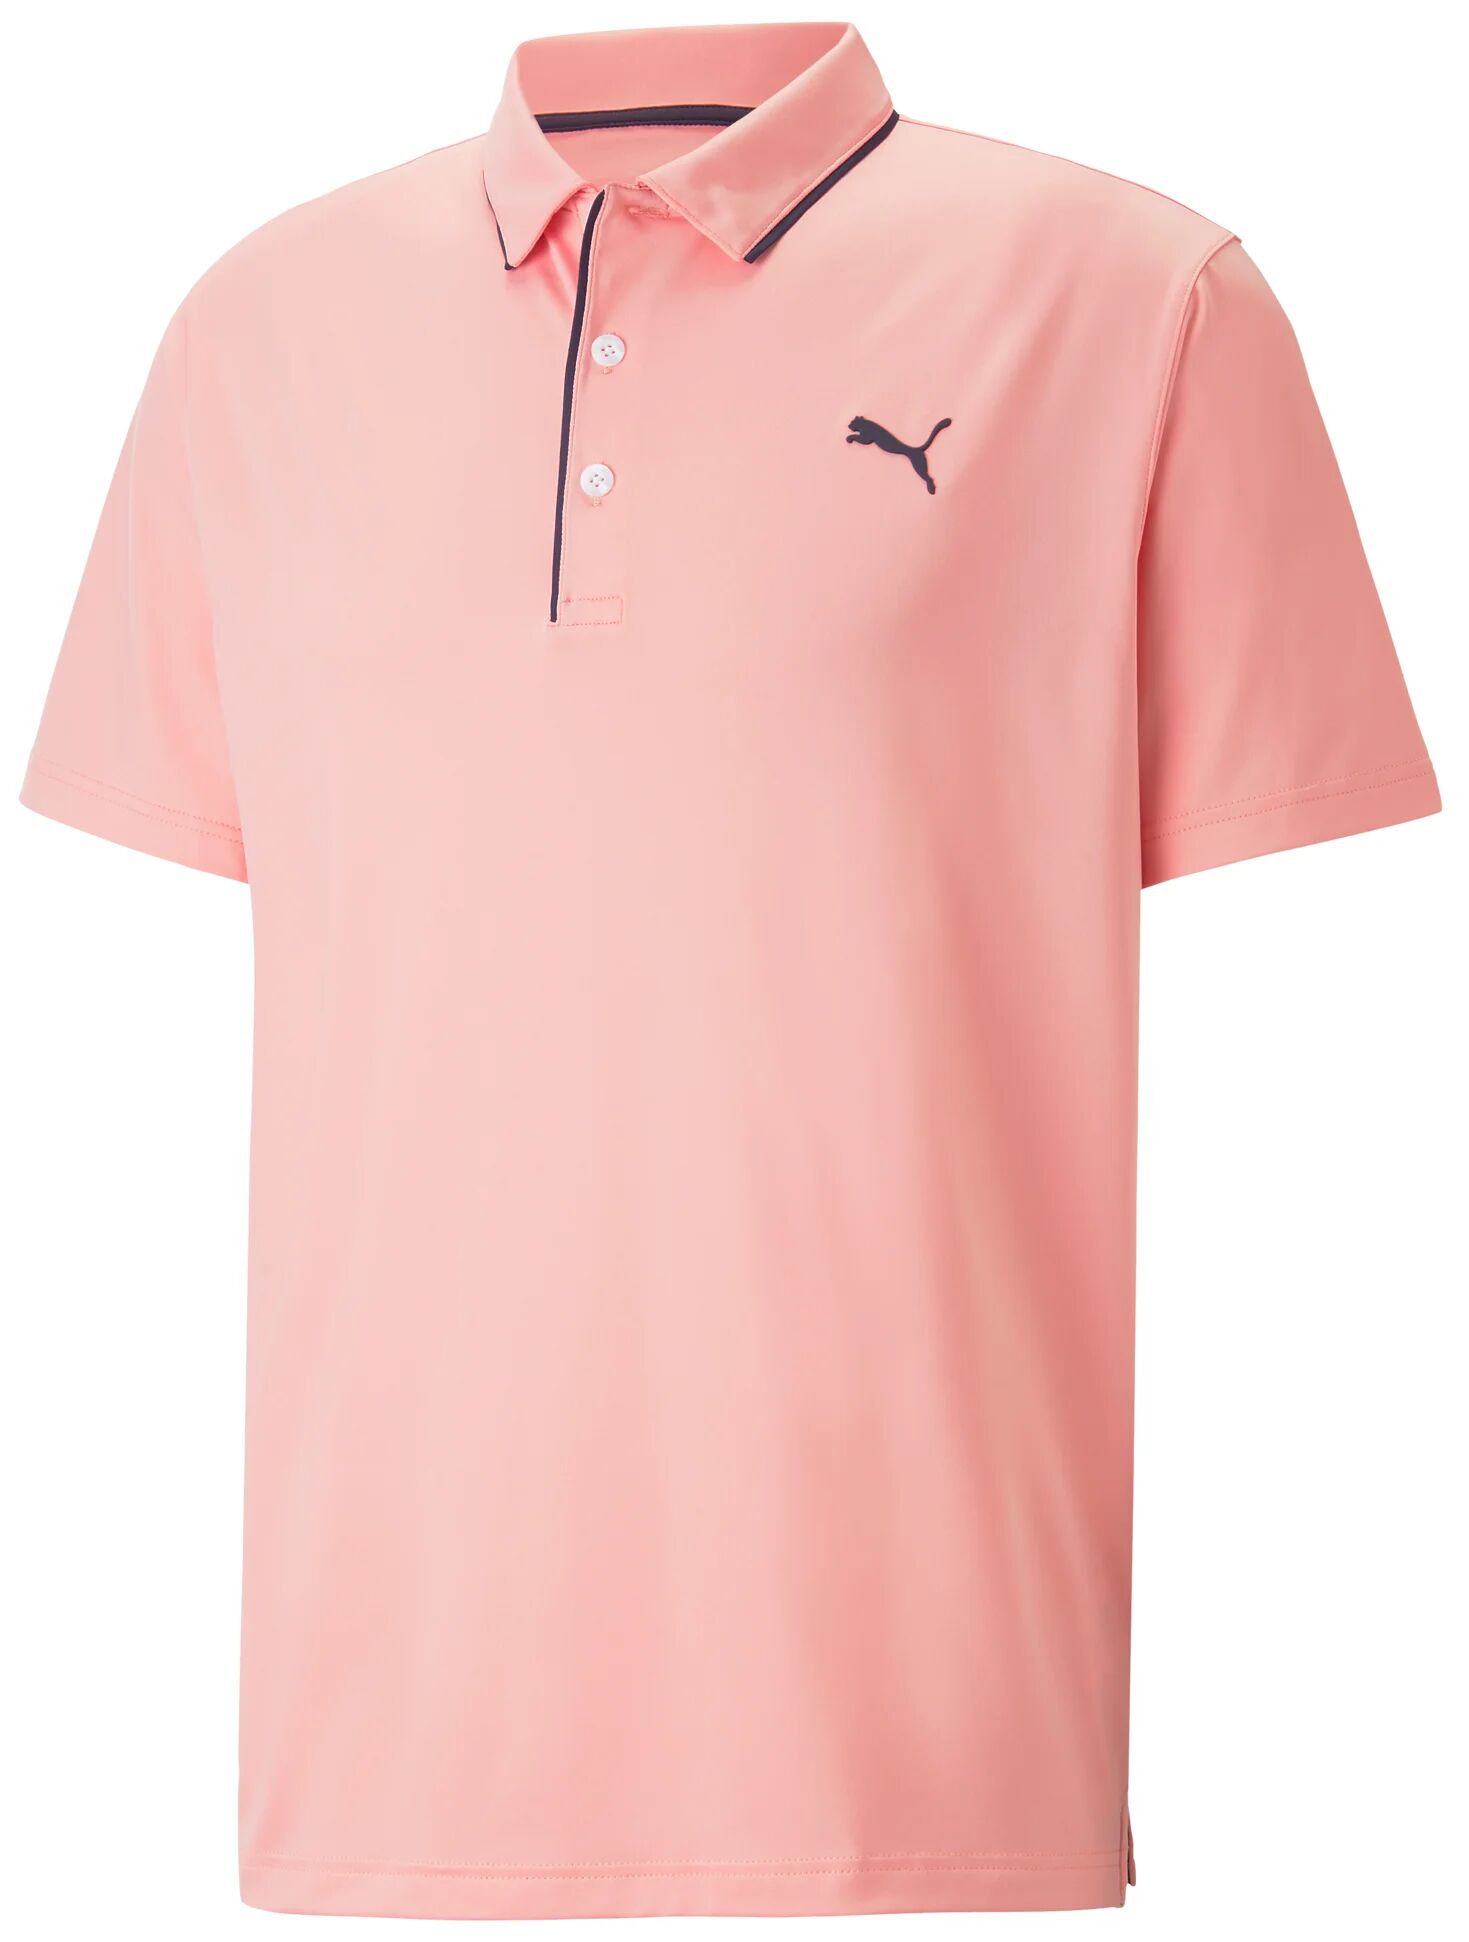 Puma MATTR Bridges Men's Golf Polo - Pink, Size: Small